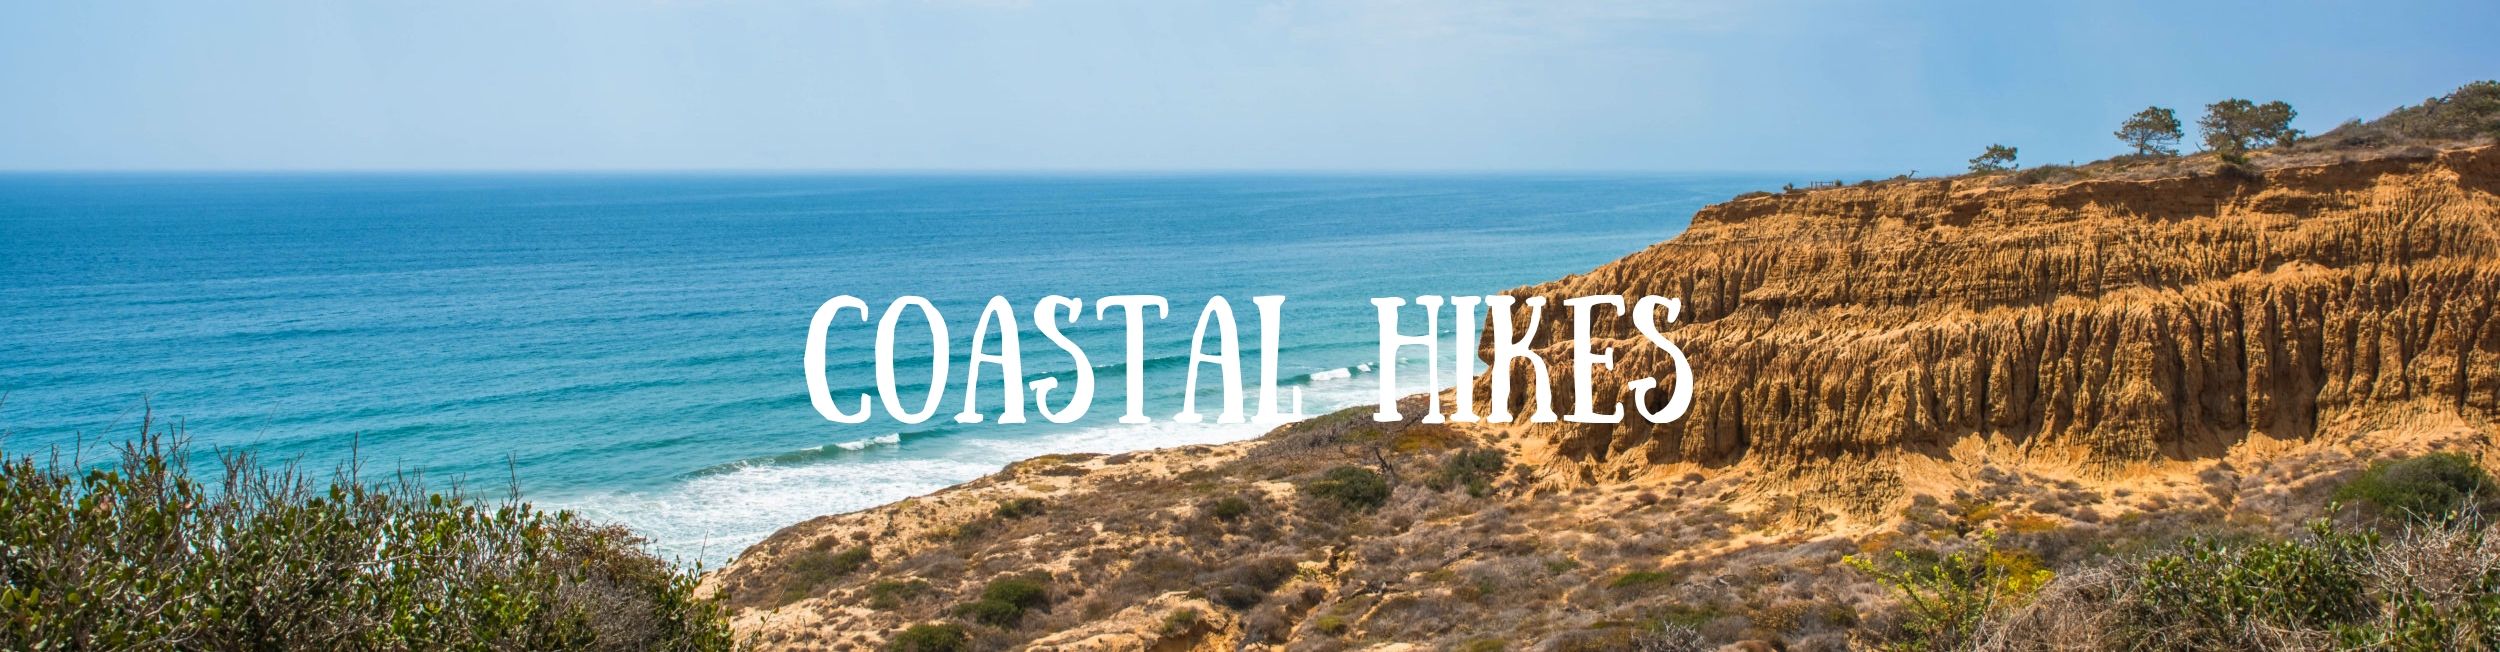 Coastal Hikes - We Who Roam